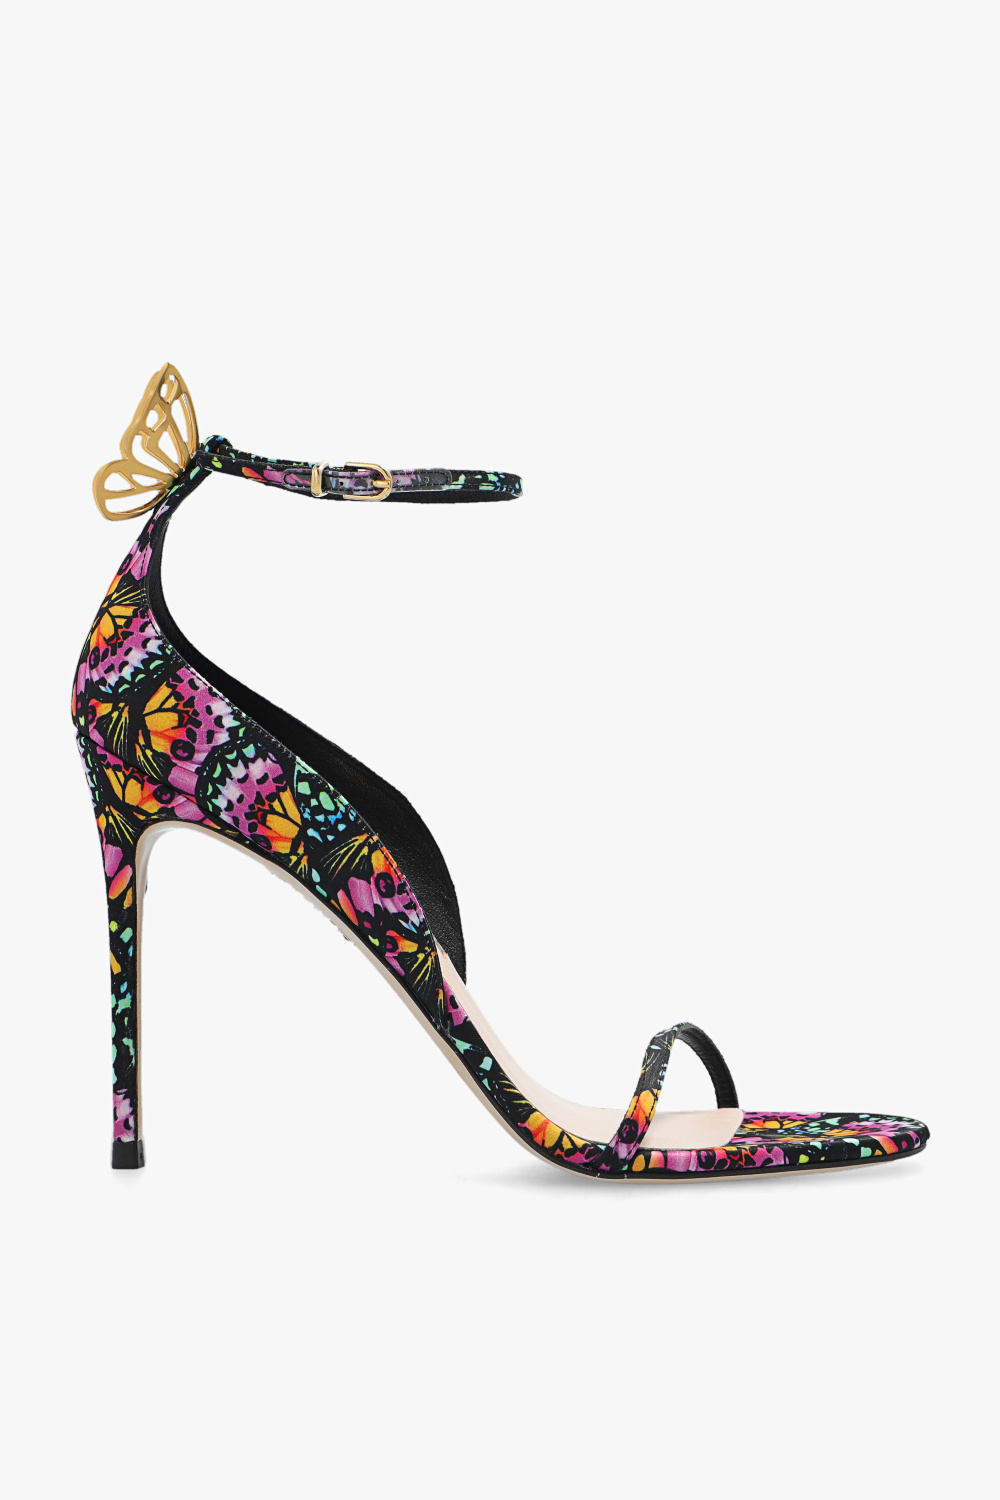 Sophia Webster ‘Mariposa’ stiletto sandals